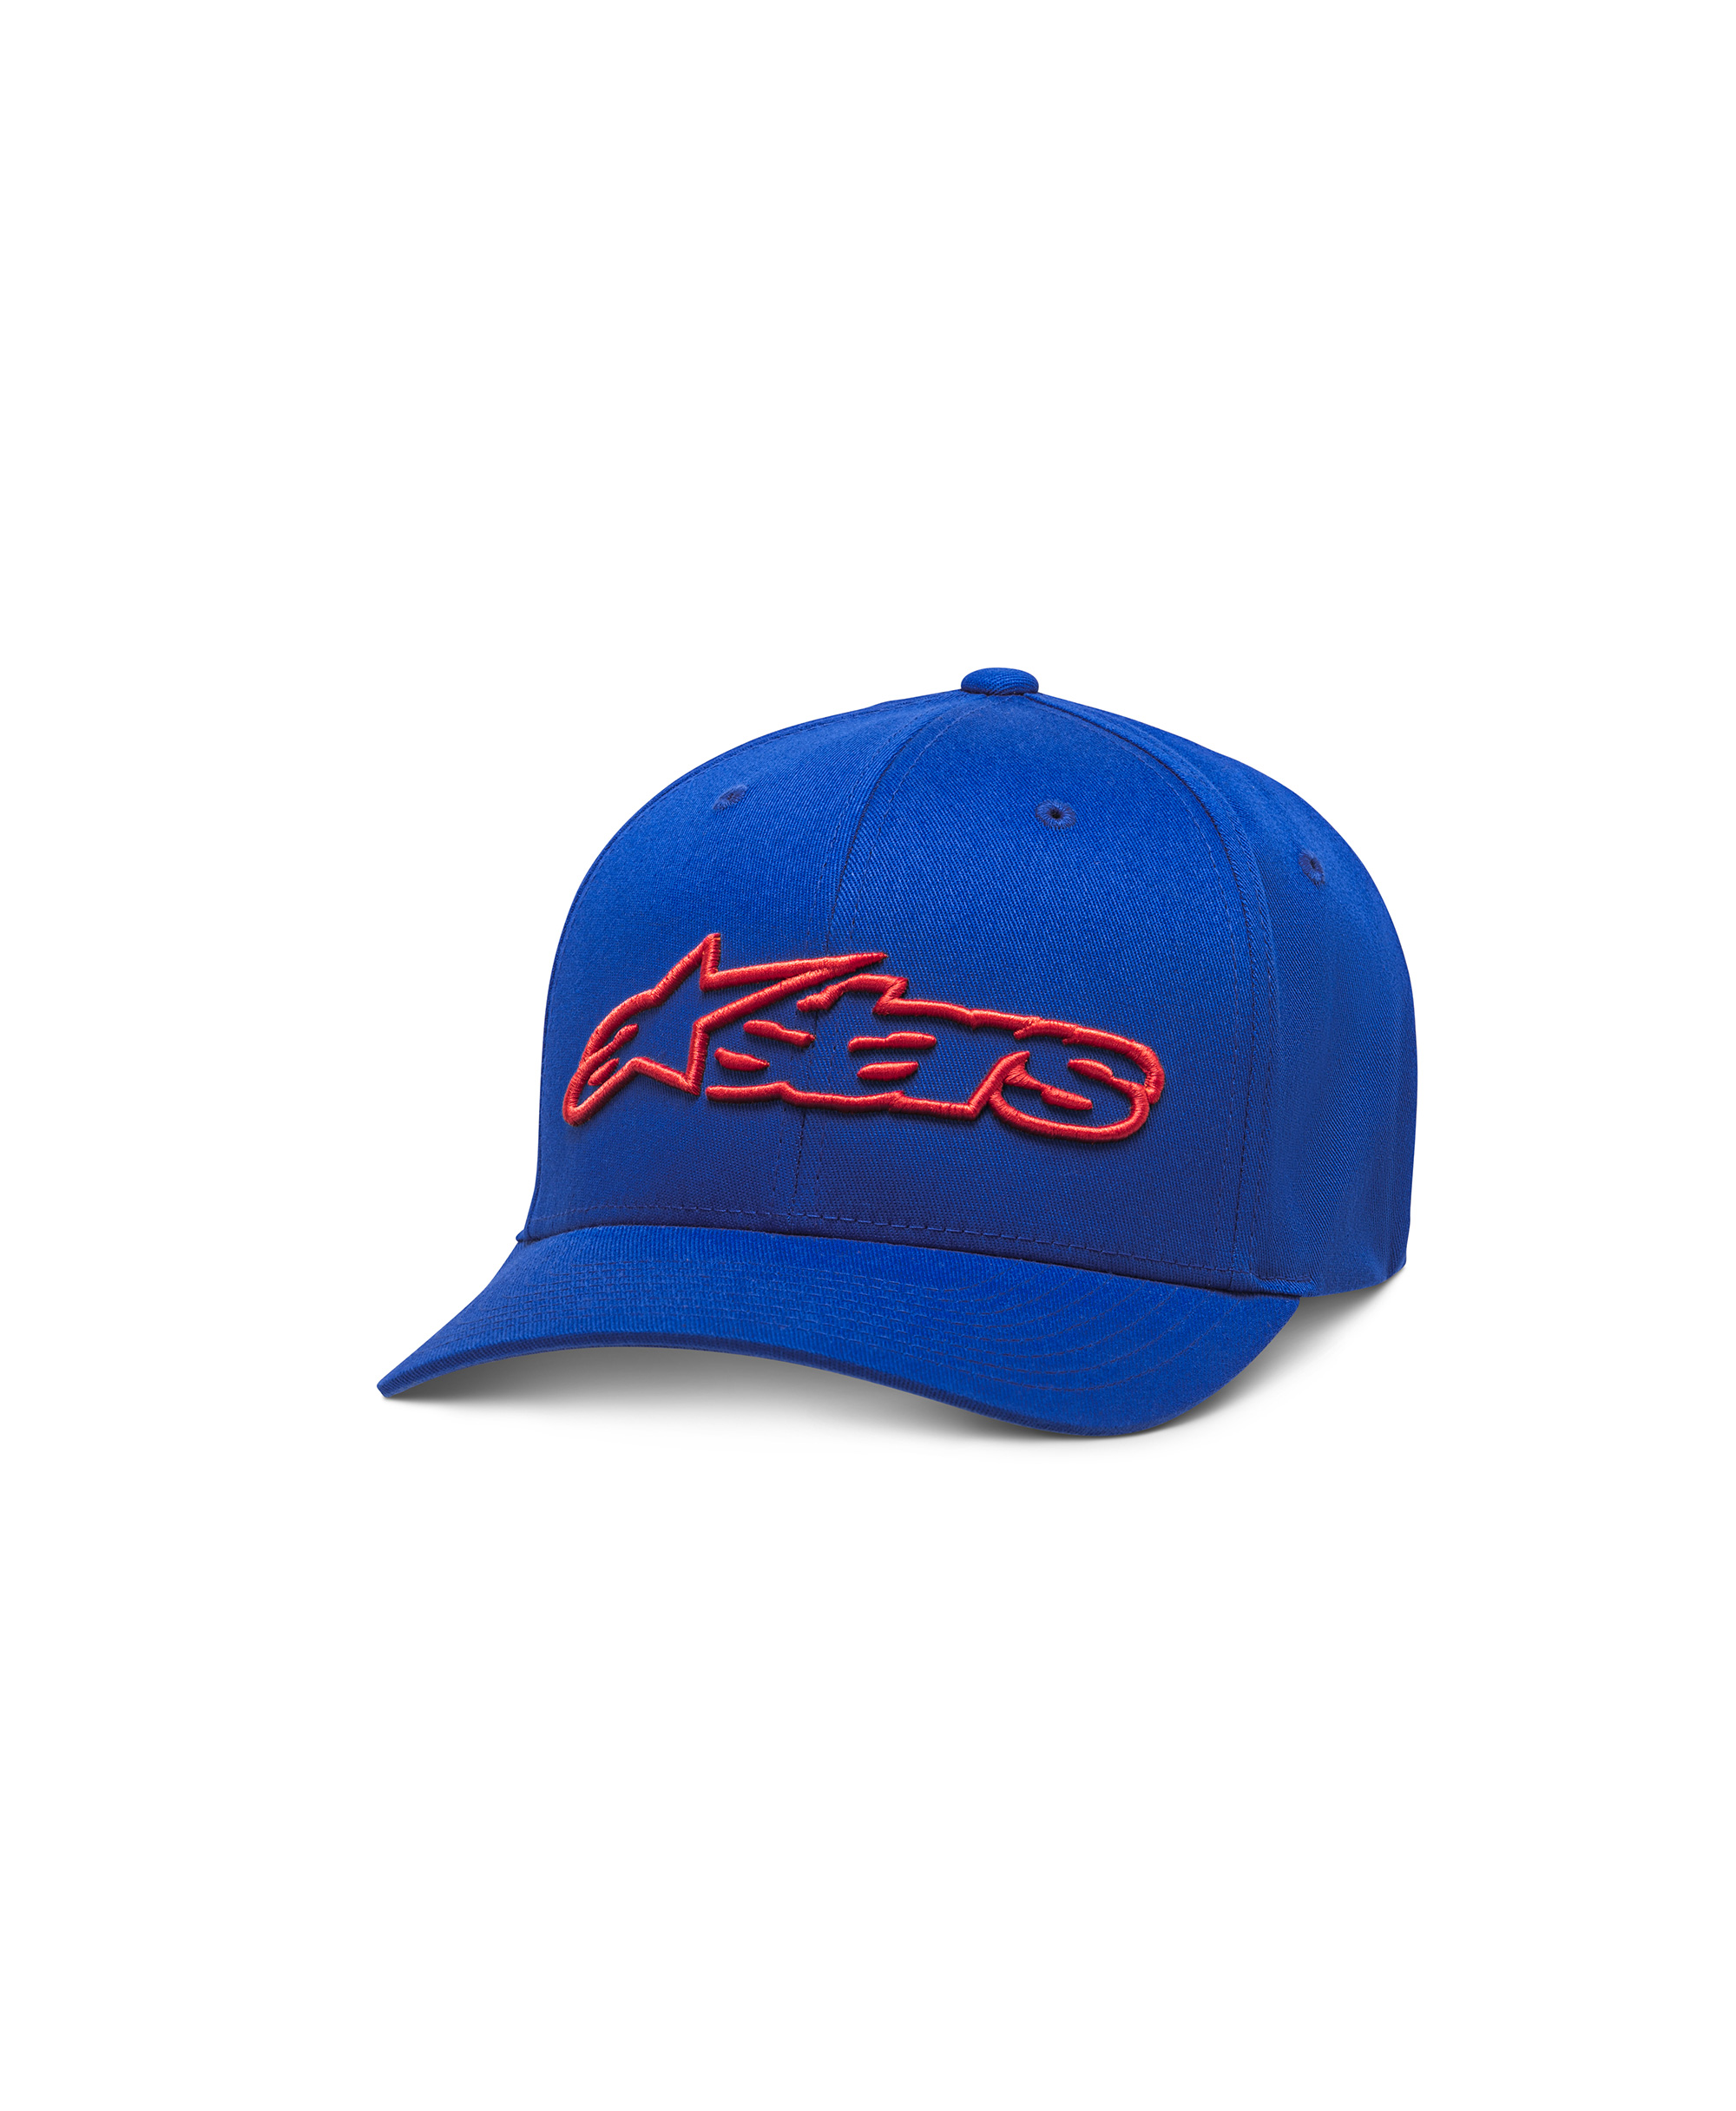 BLAZE FLEXFIT HAT BLUE/RED